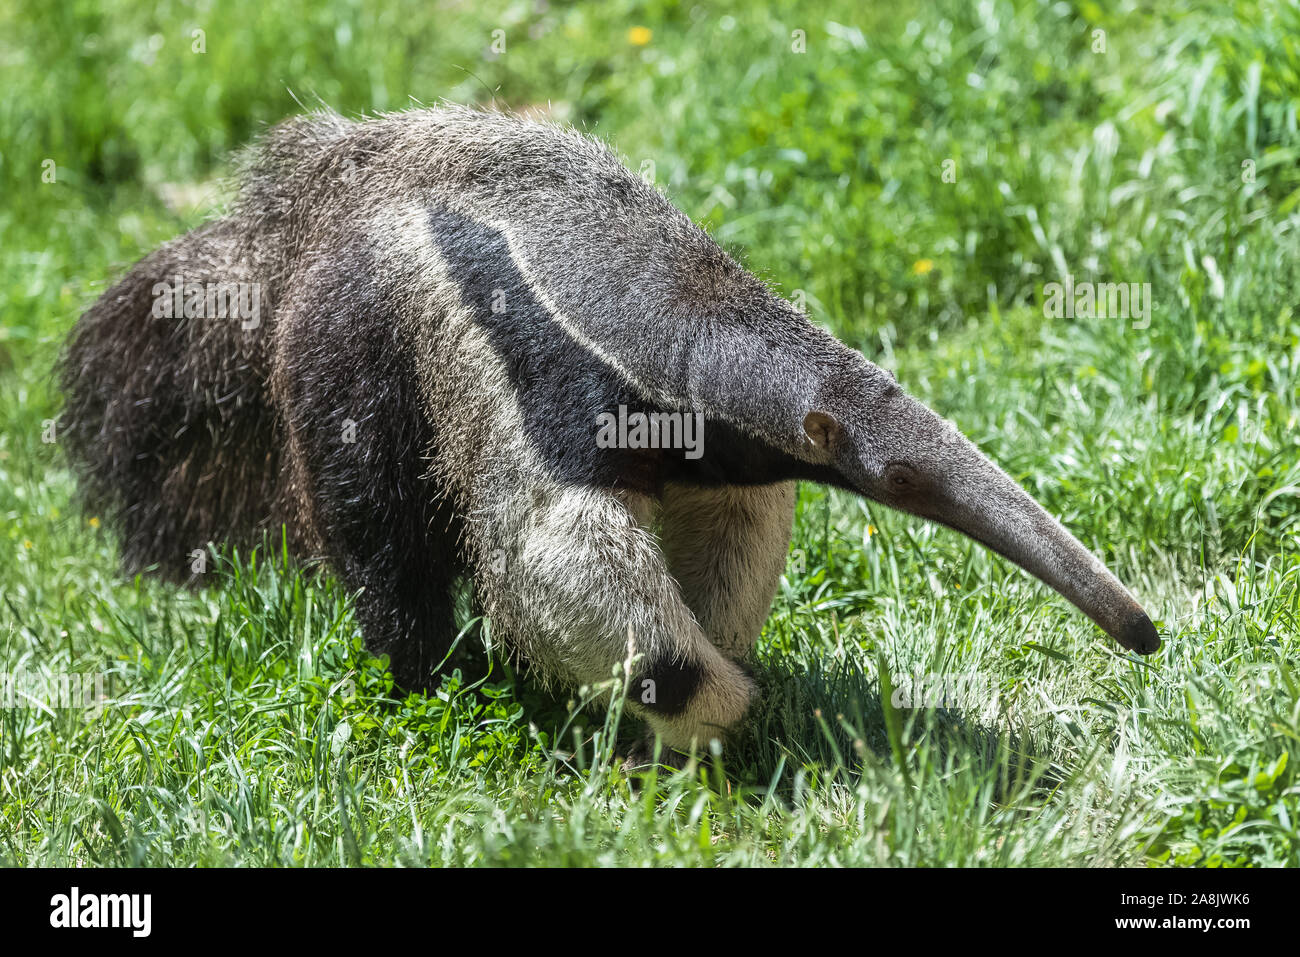 Giant Anteater, animal, portrait Stock Photo